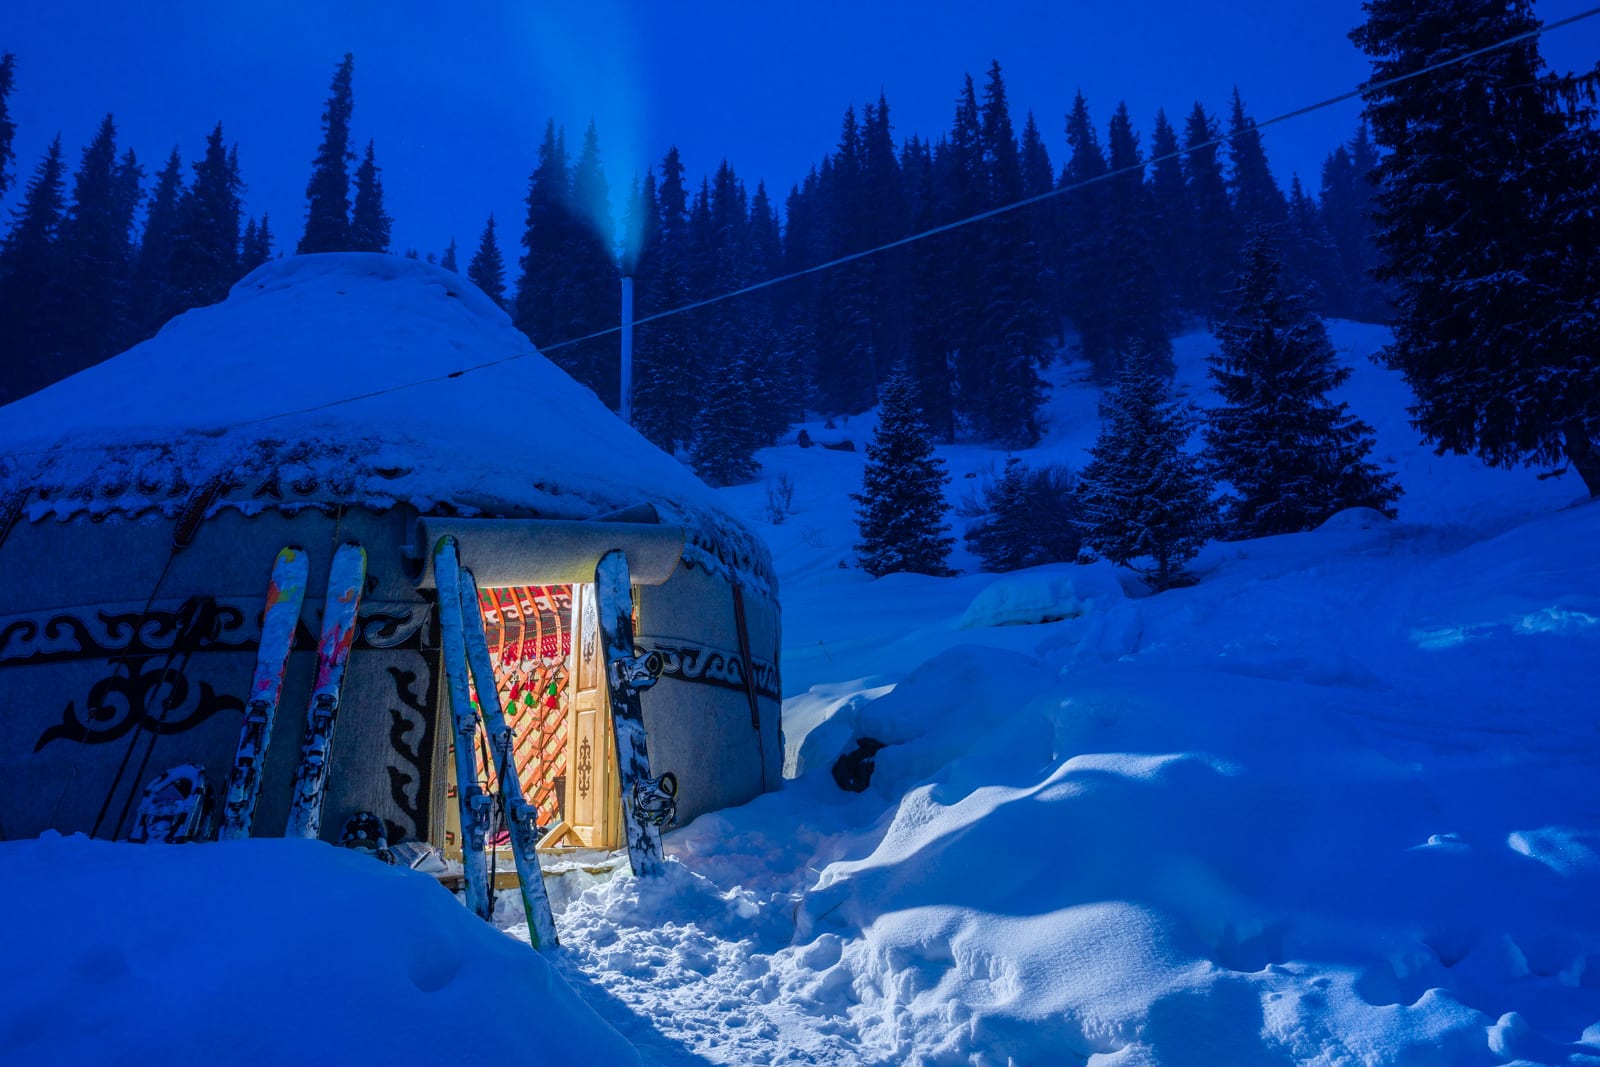 Backcountry ski yurt in Boz Uchuk, Kyrgyzstan